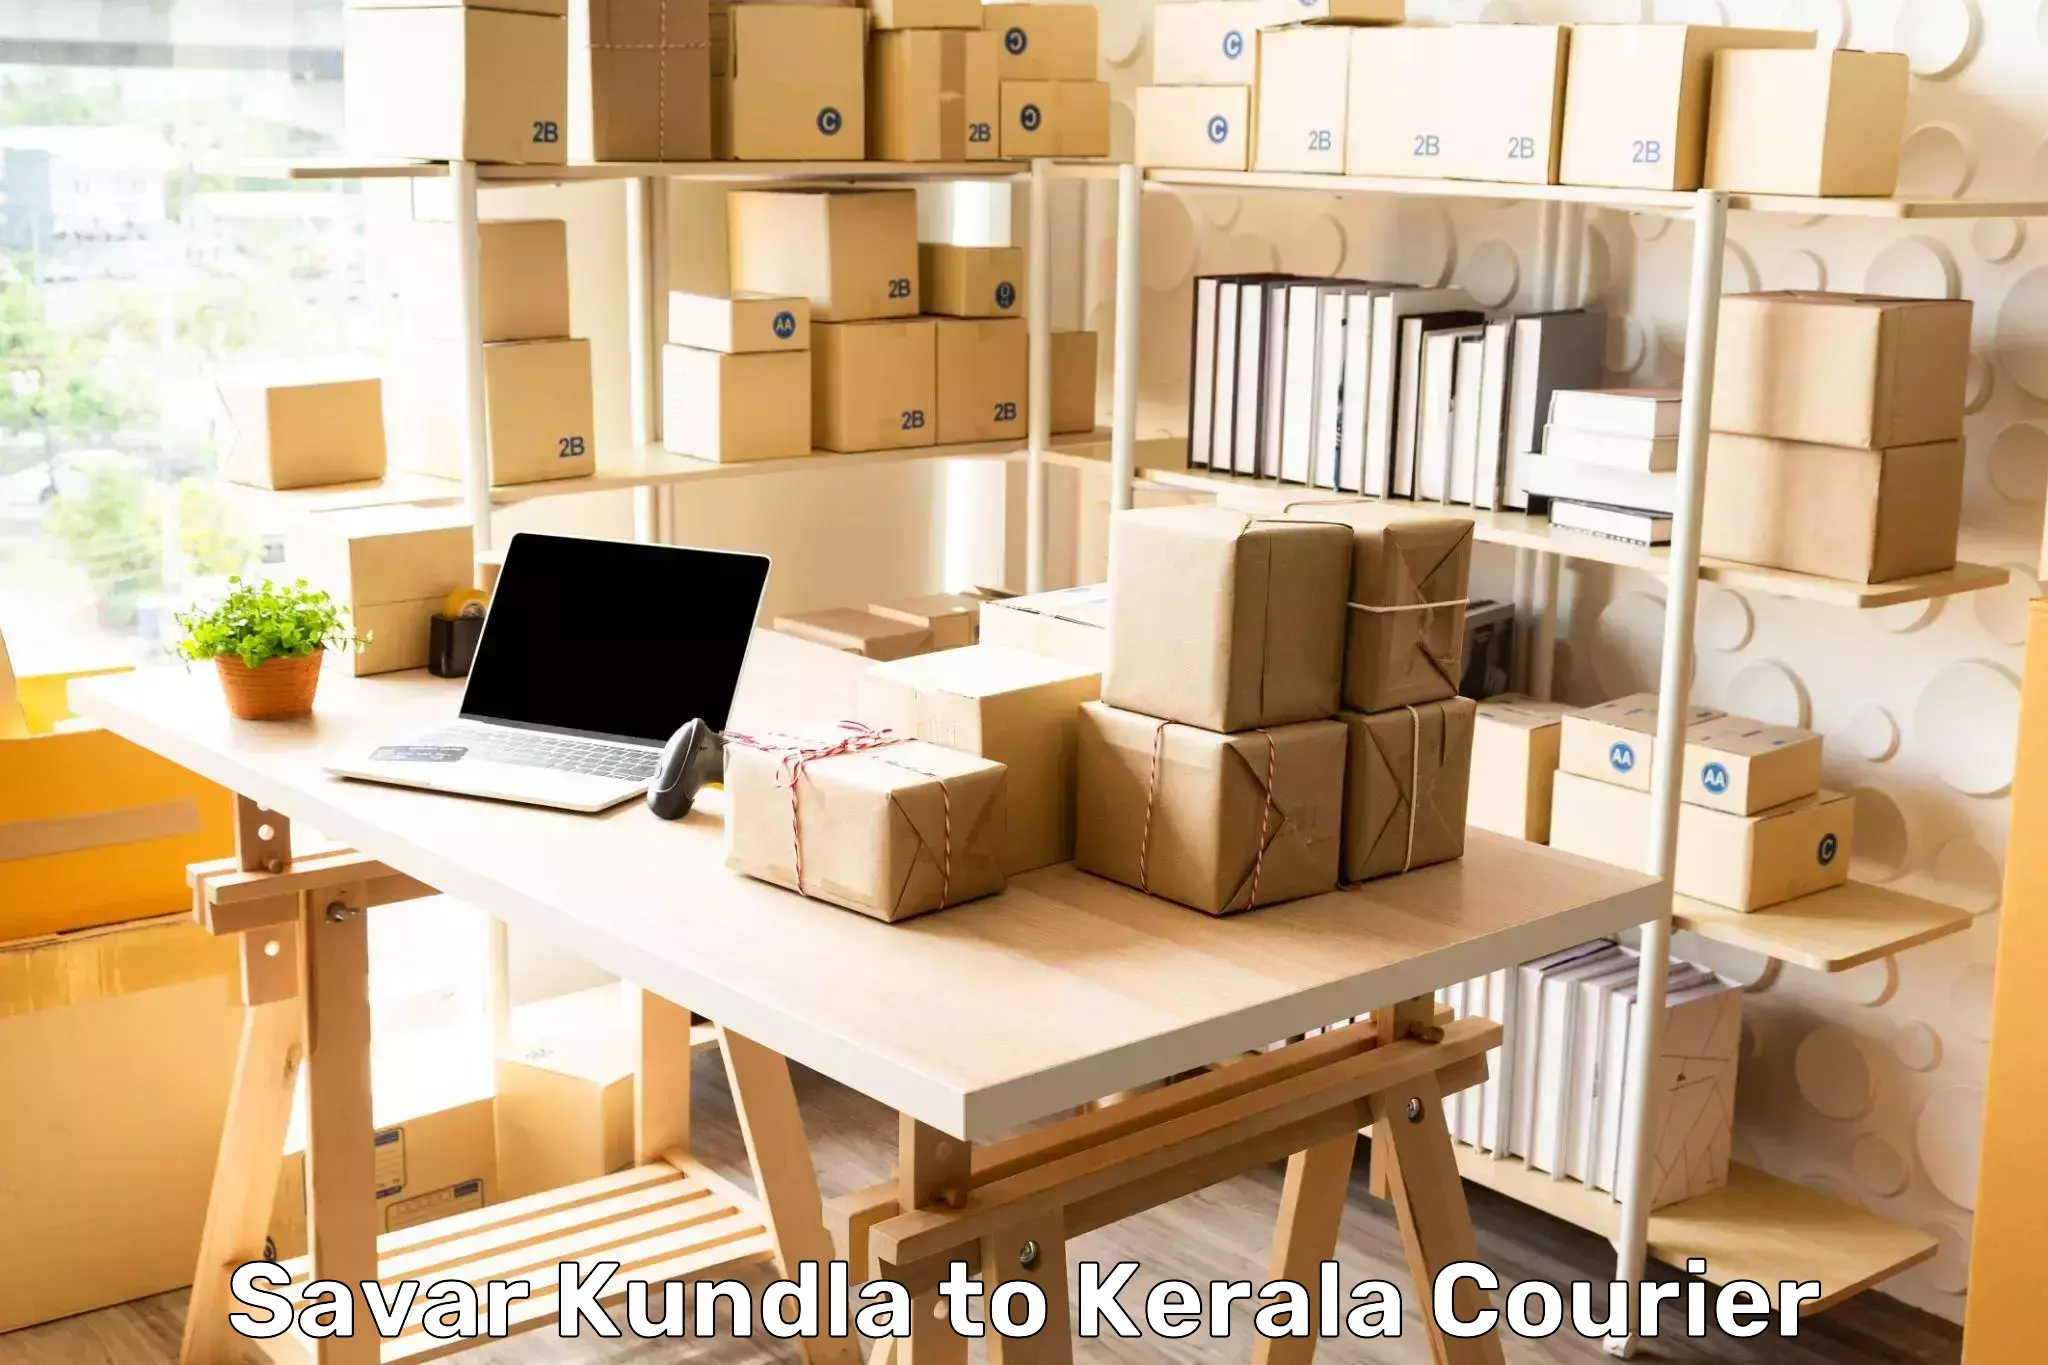 Supply chain delivery Savar Kundla to Puthukkad